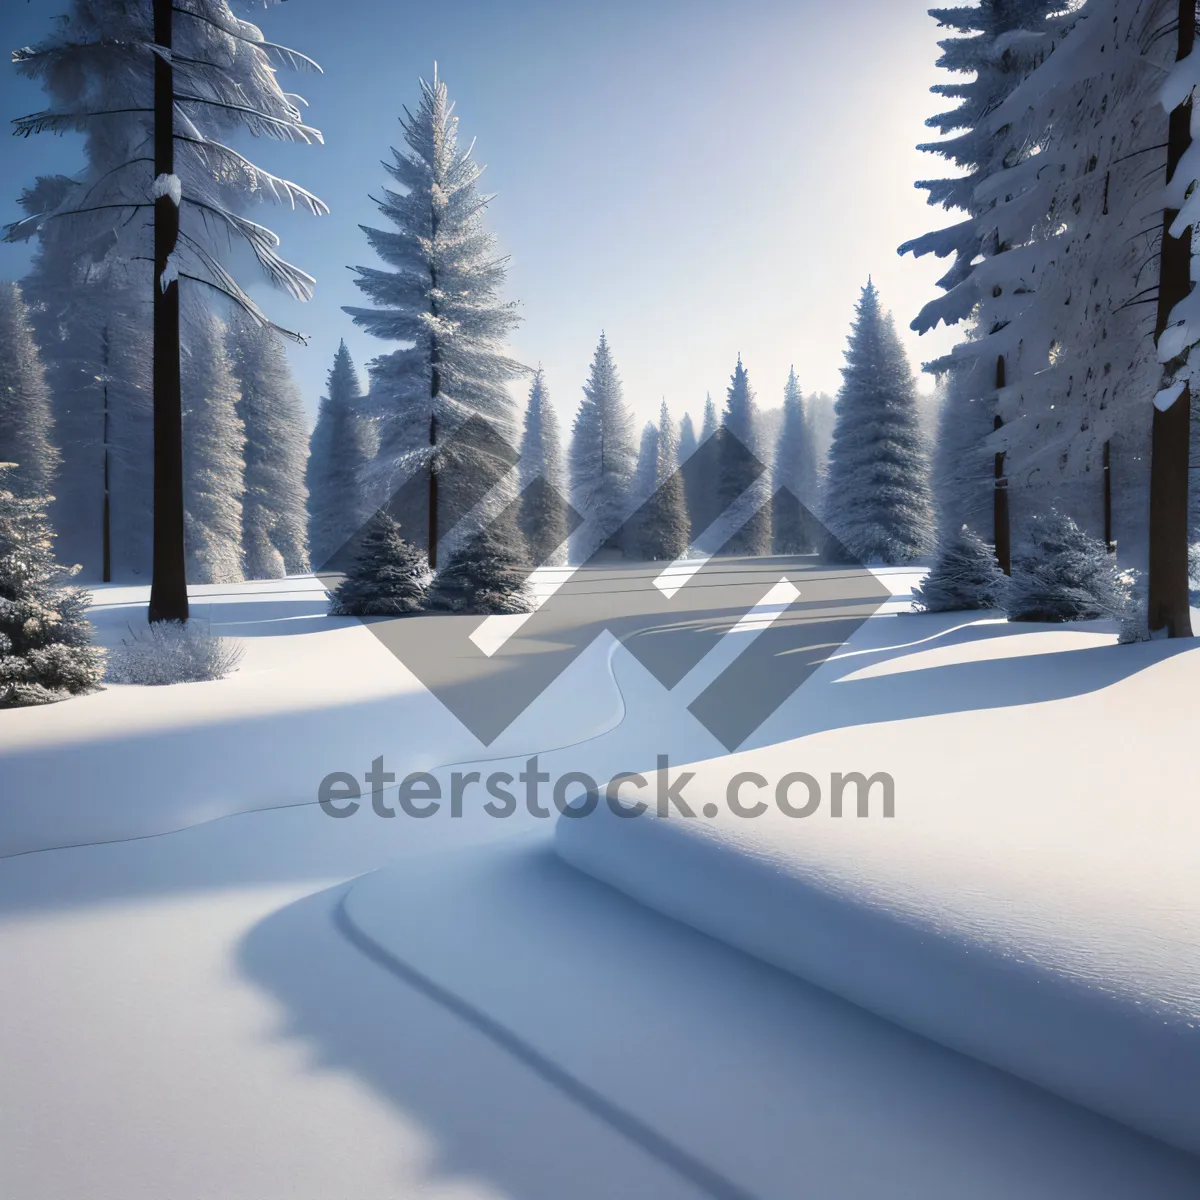 Picture of Frozen Alpines in Winter Wonderland